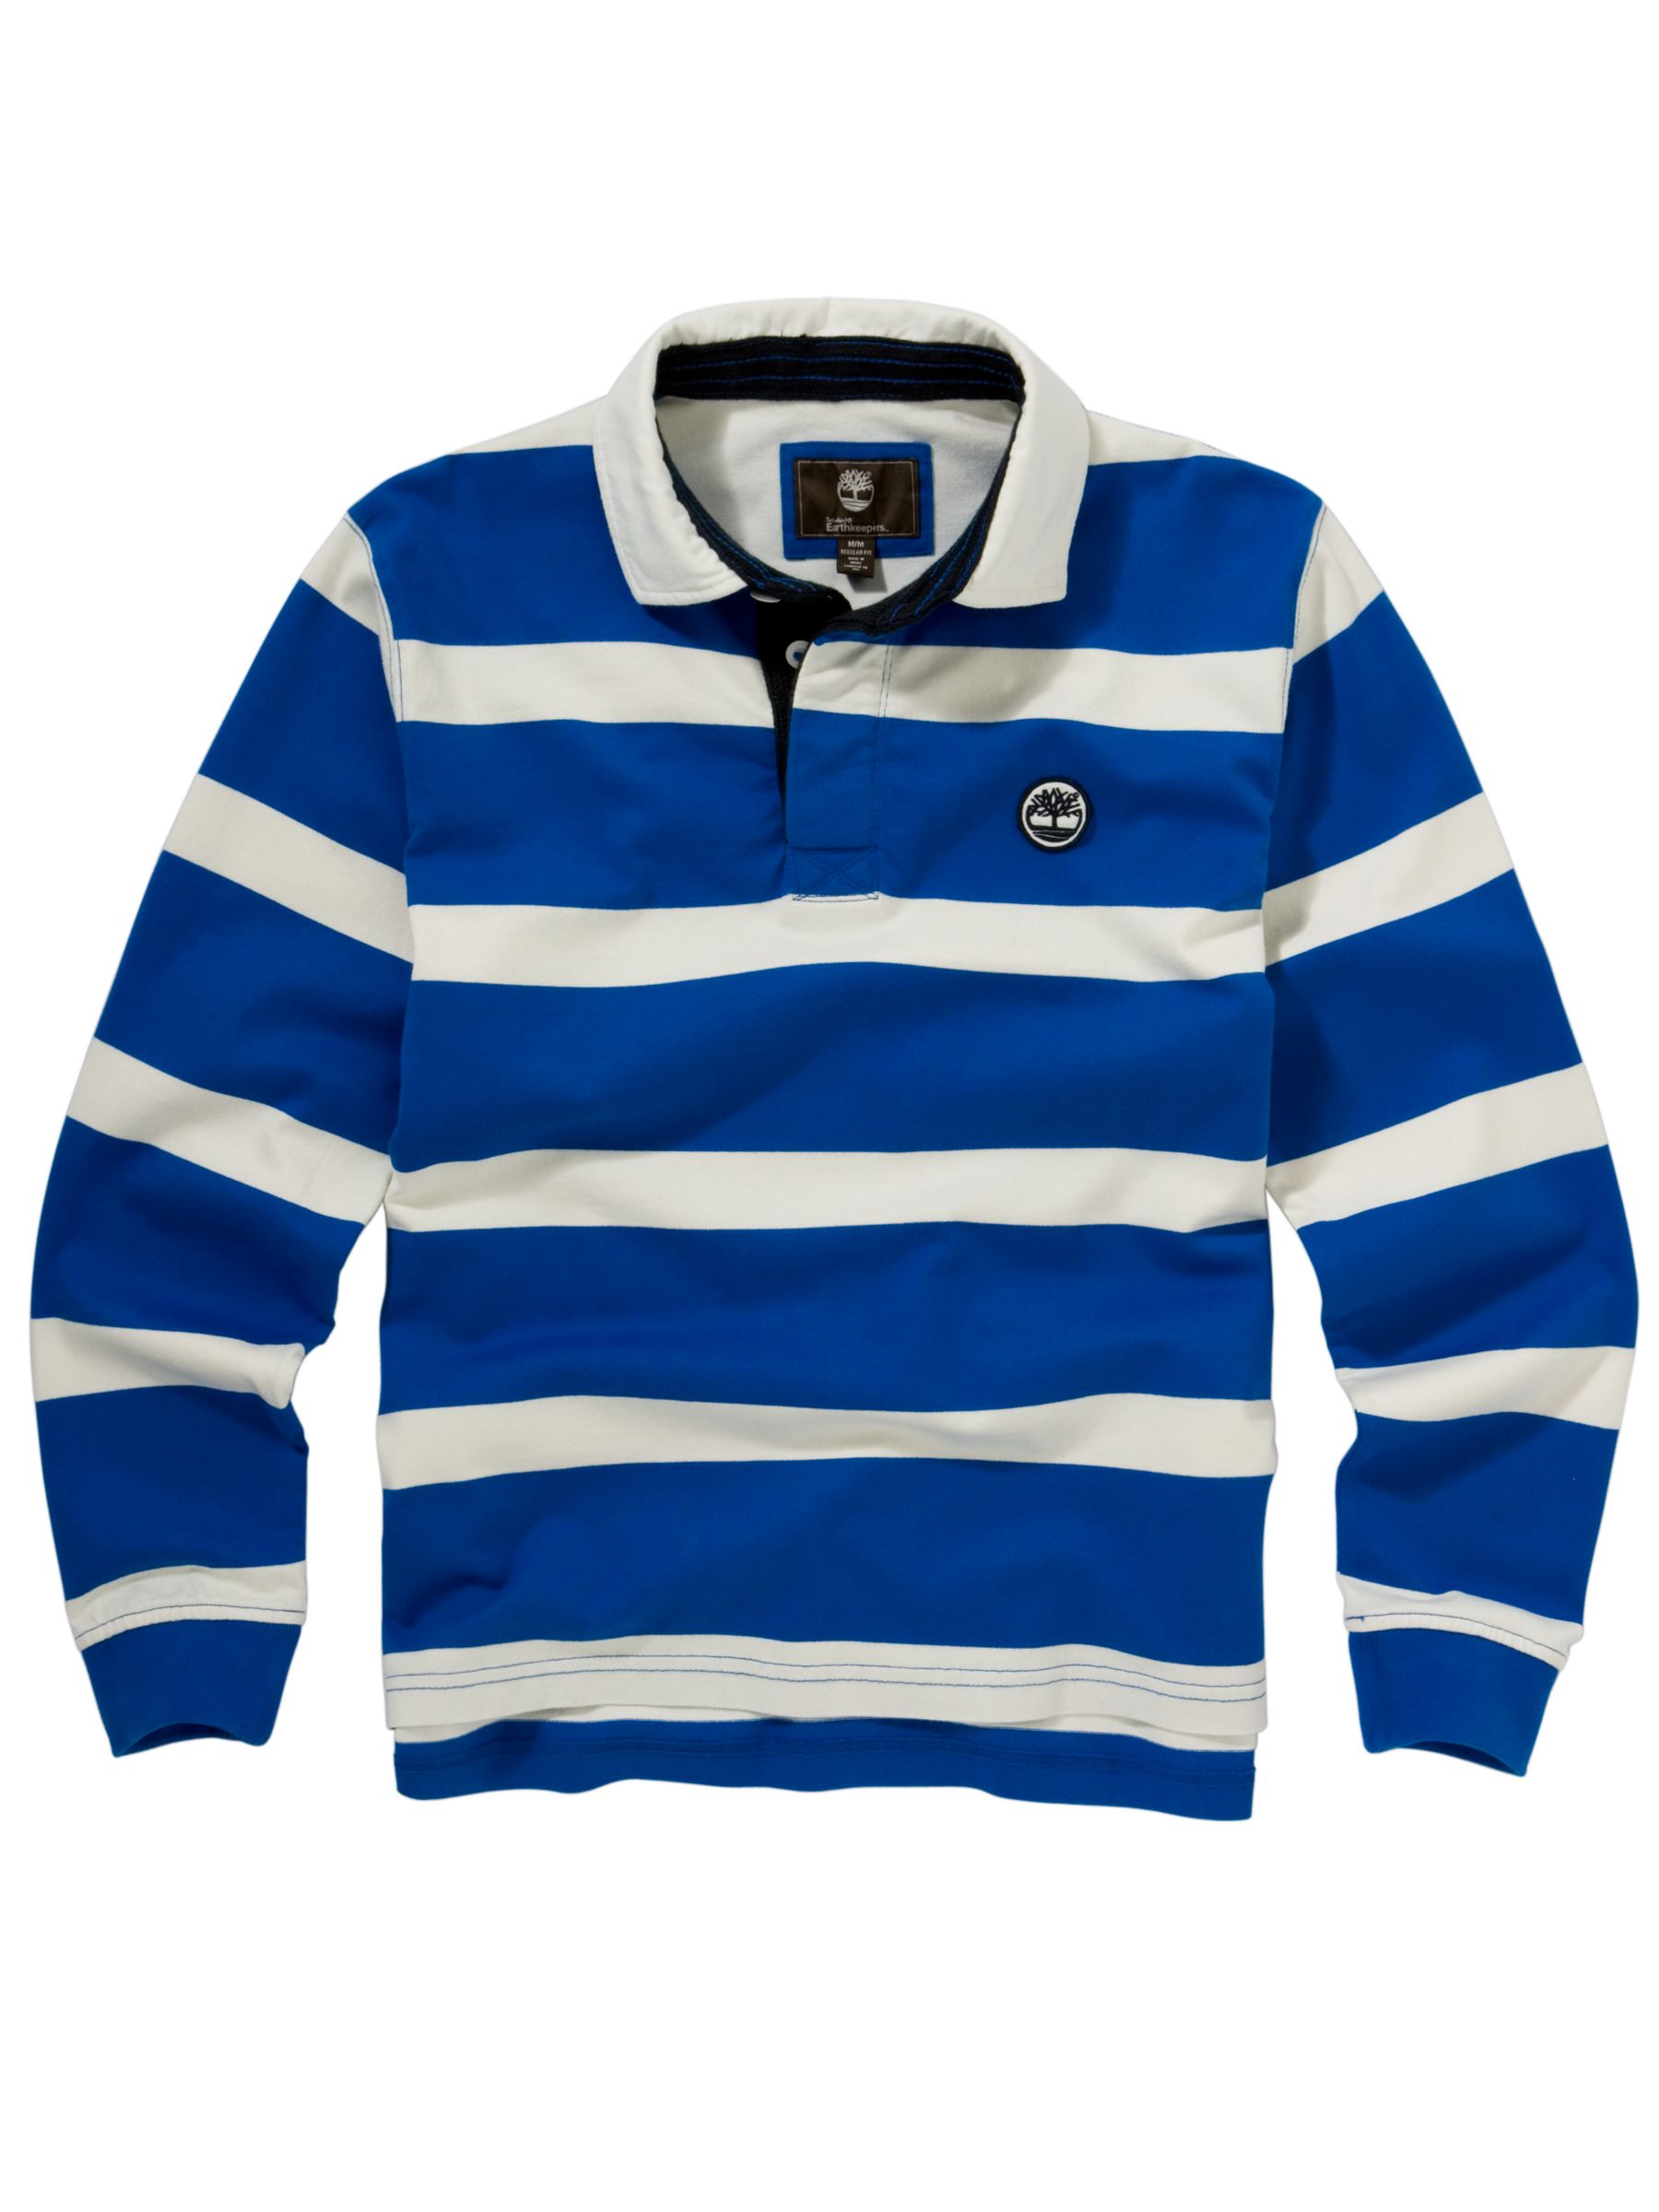 Timberland Stripe Rugby Shirt, Prince Blue